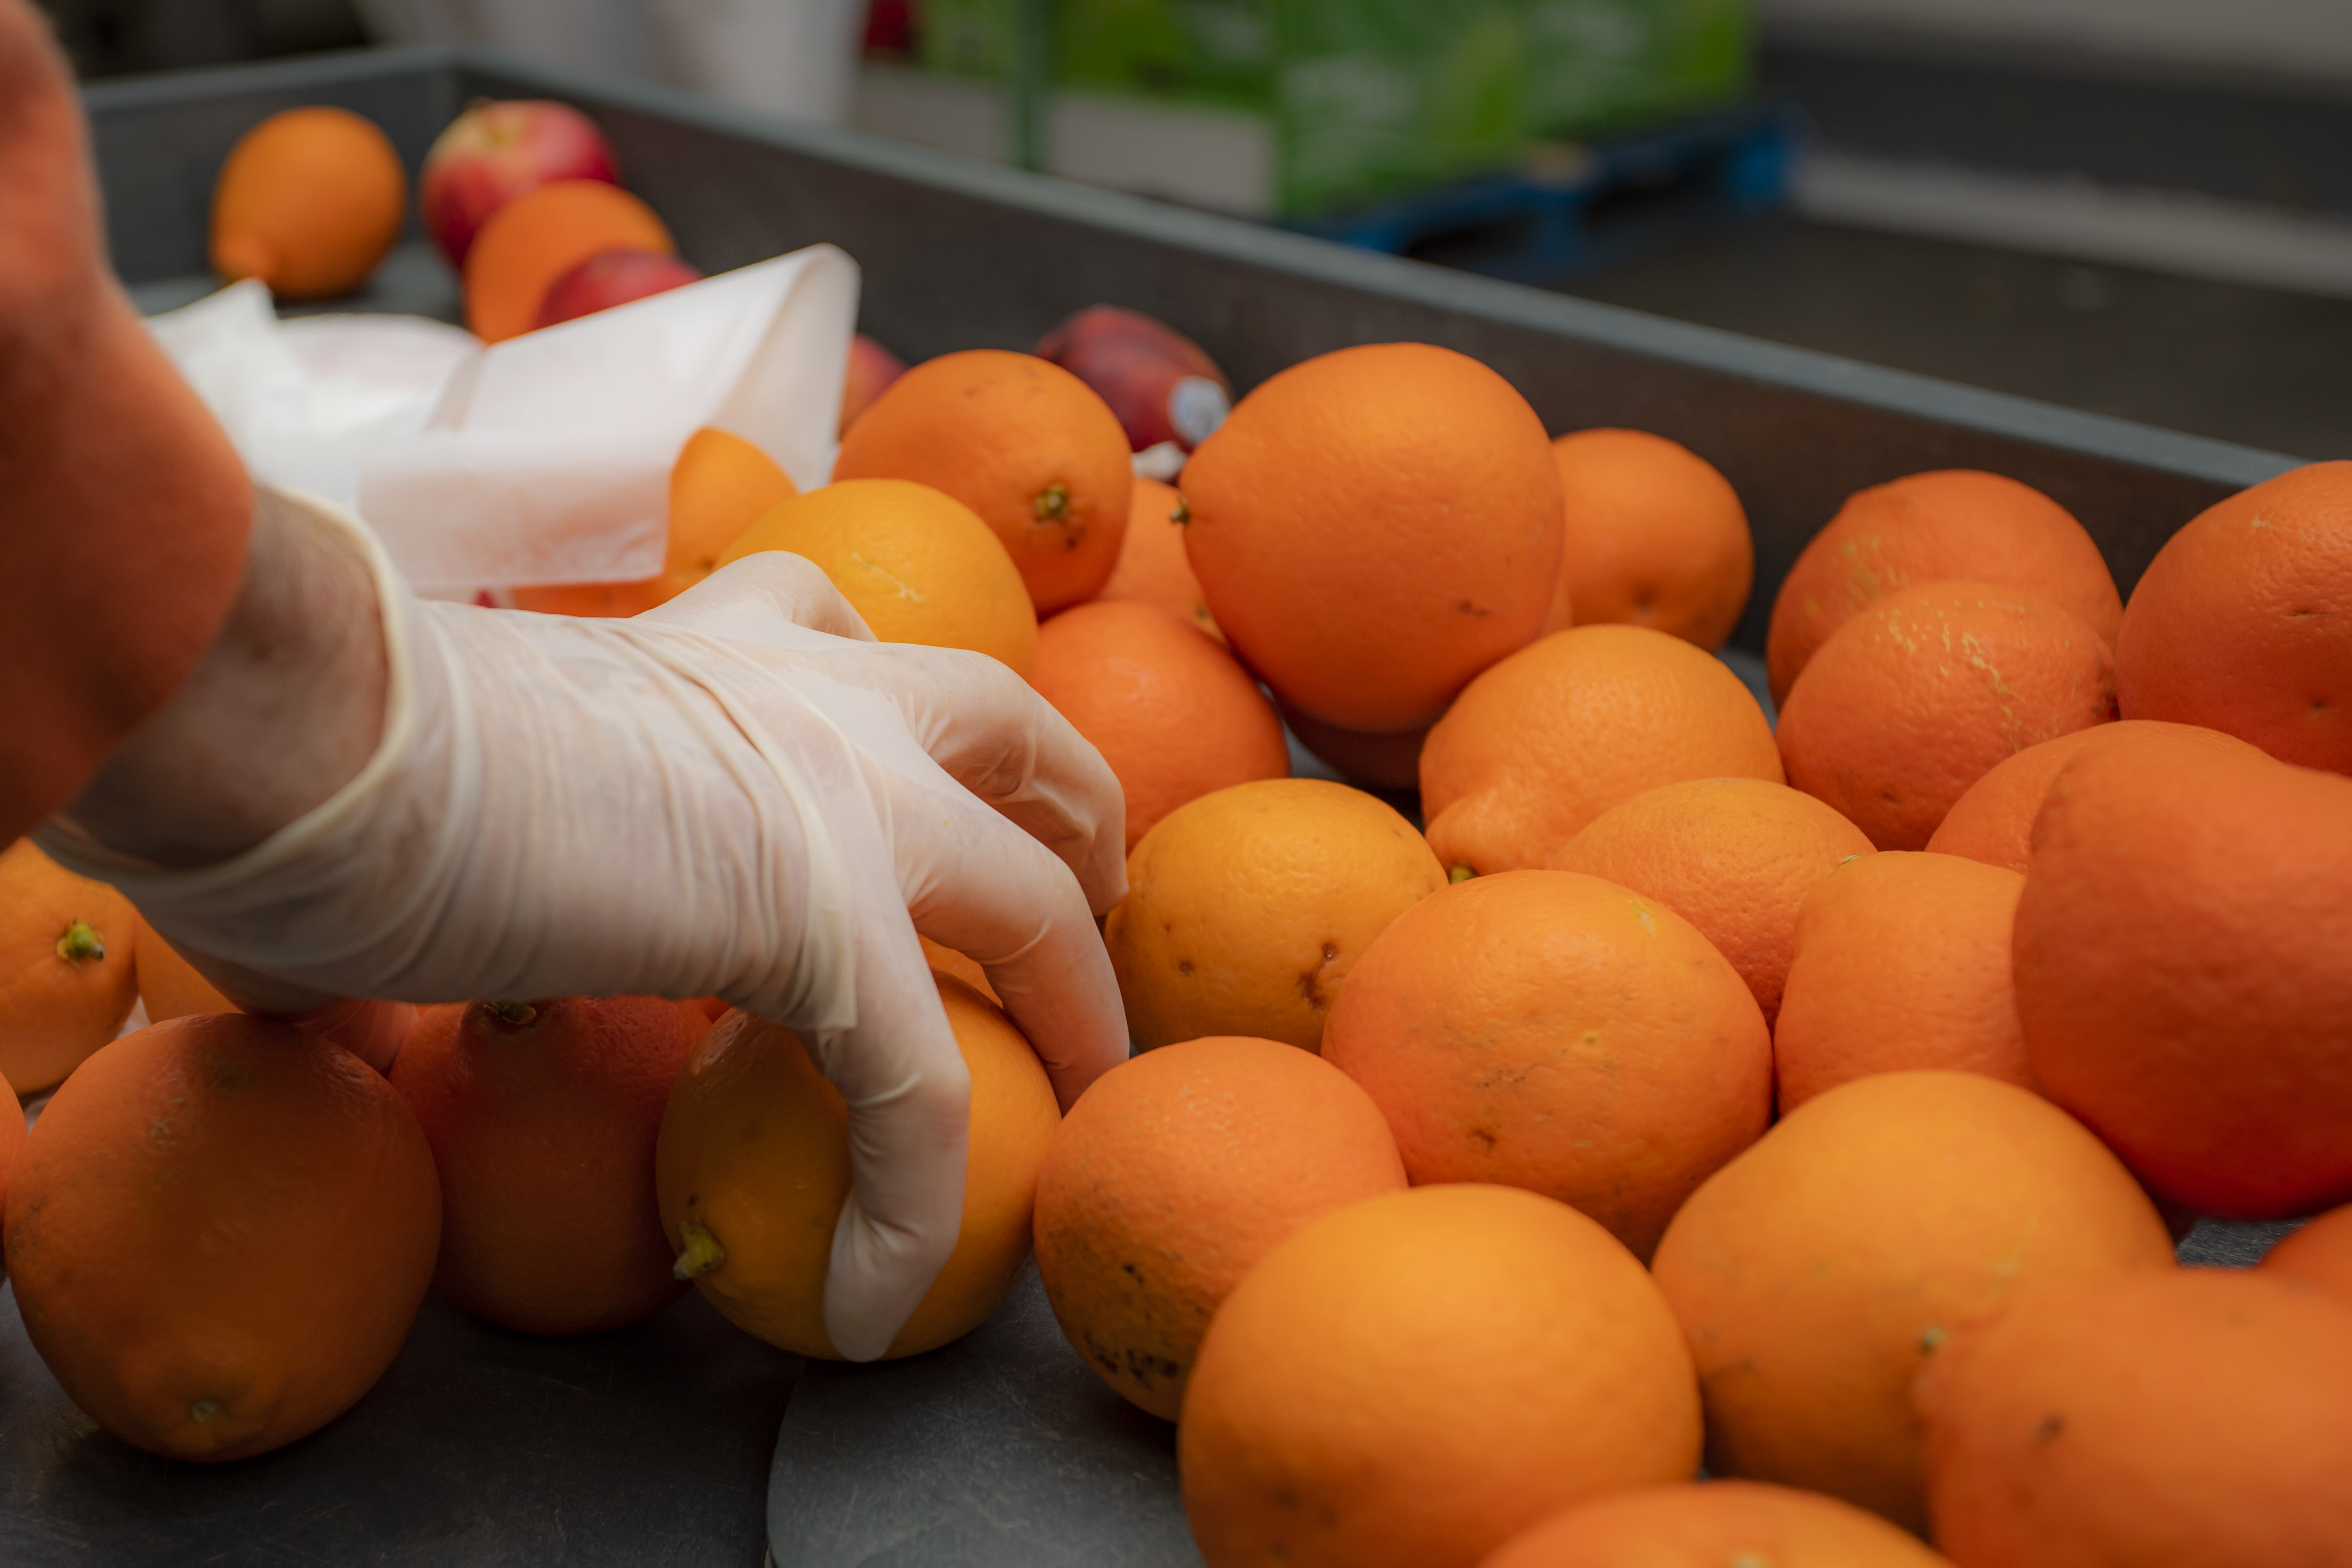 Oranges being sorted